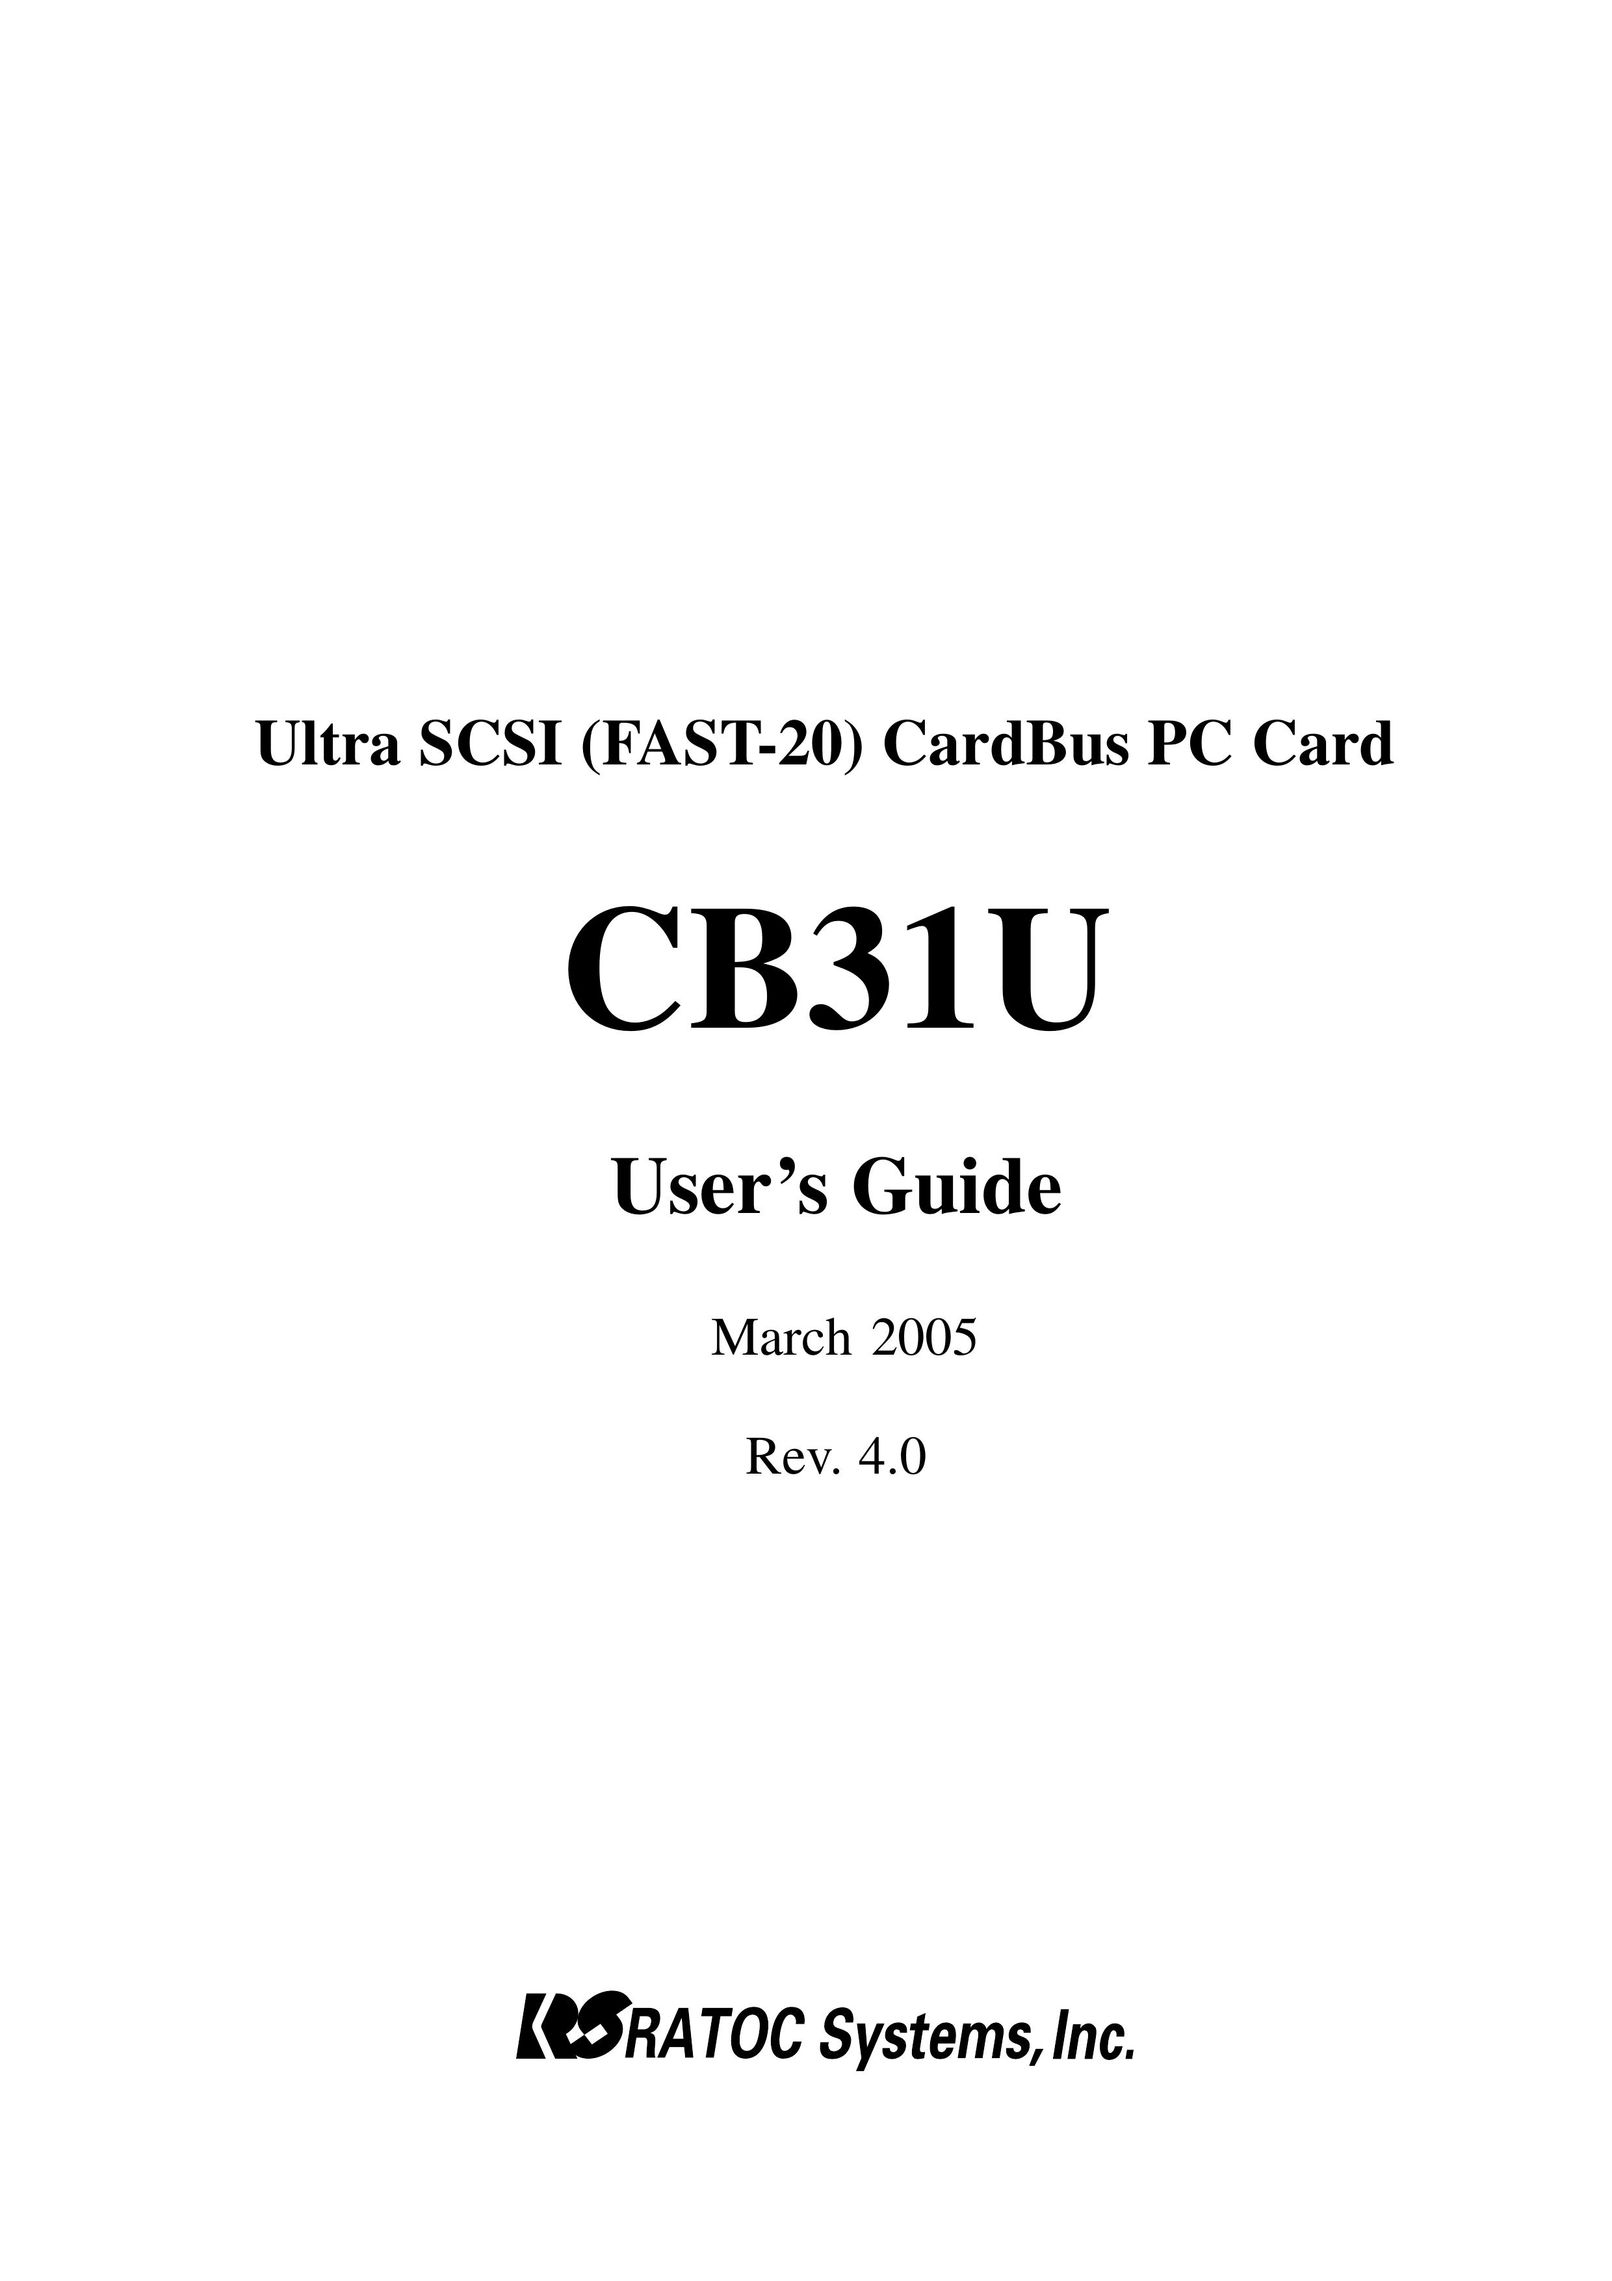 Ratoc Systems CB31U Network Card User Manual